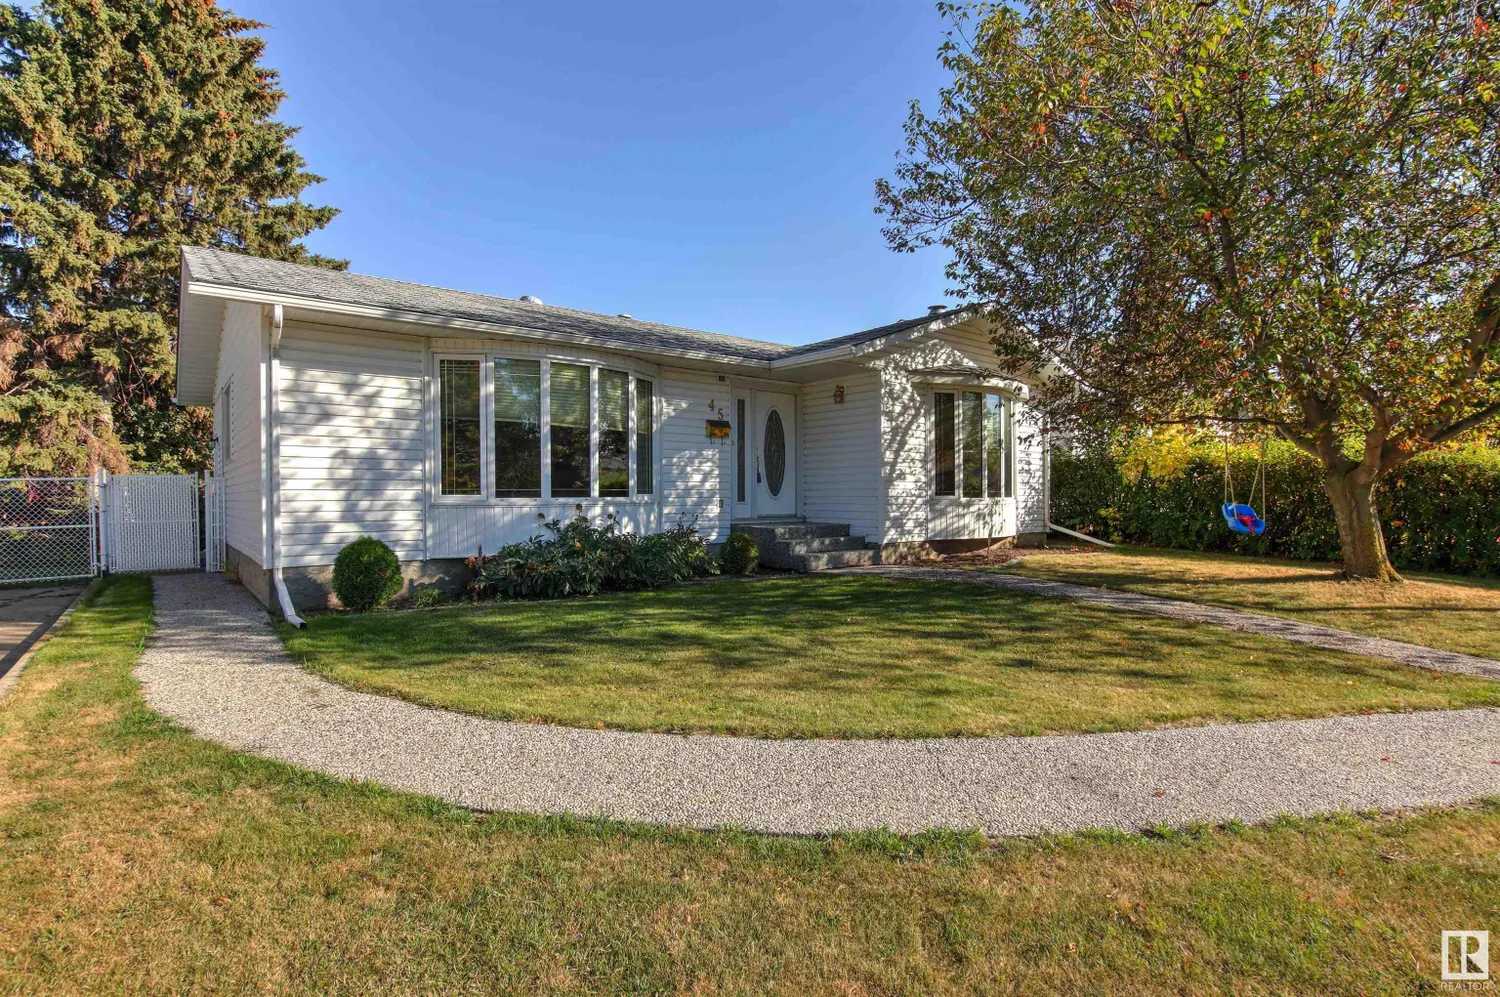 House in Spruce Grove, Alberta 11052075